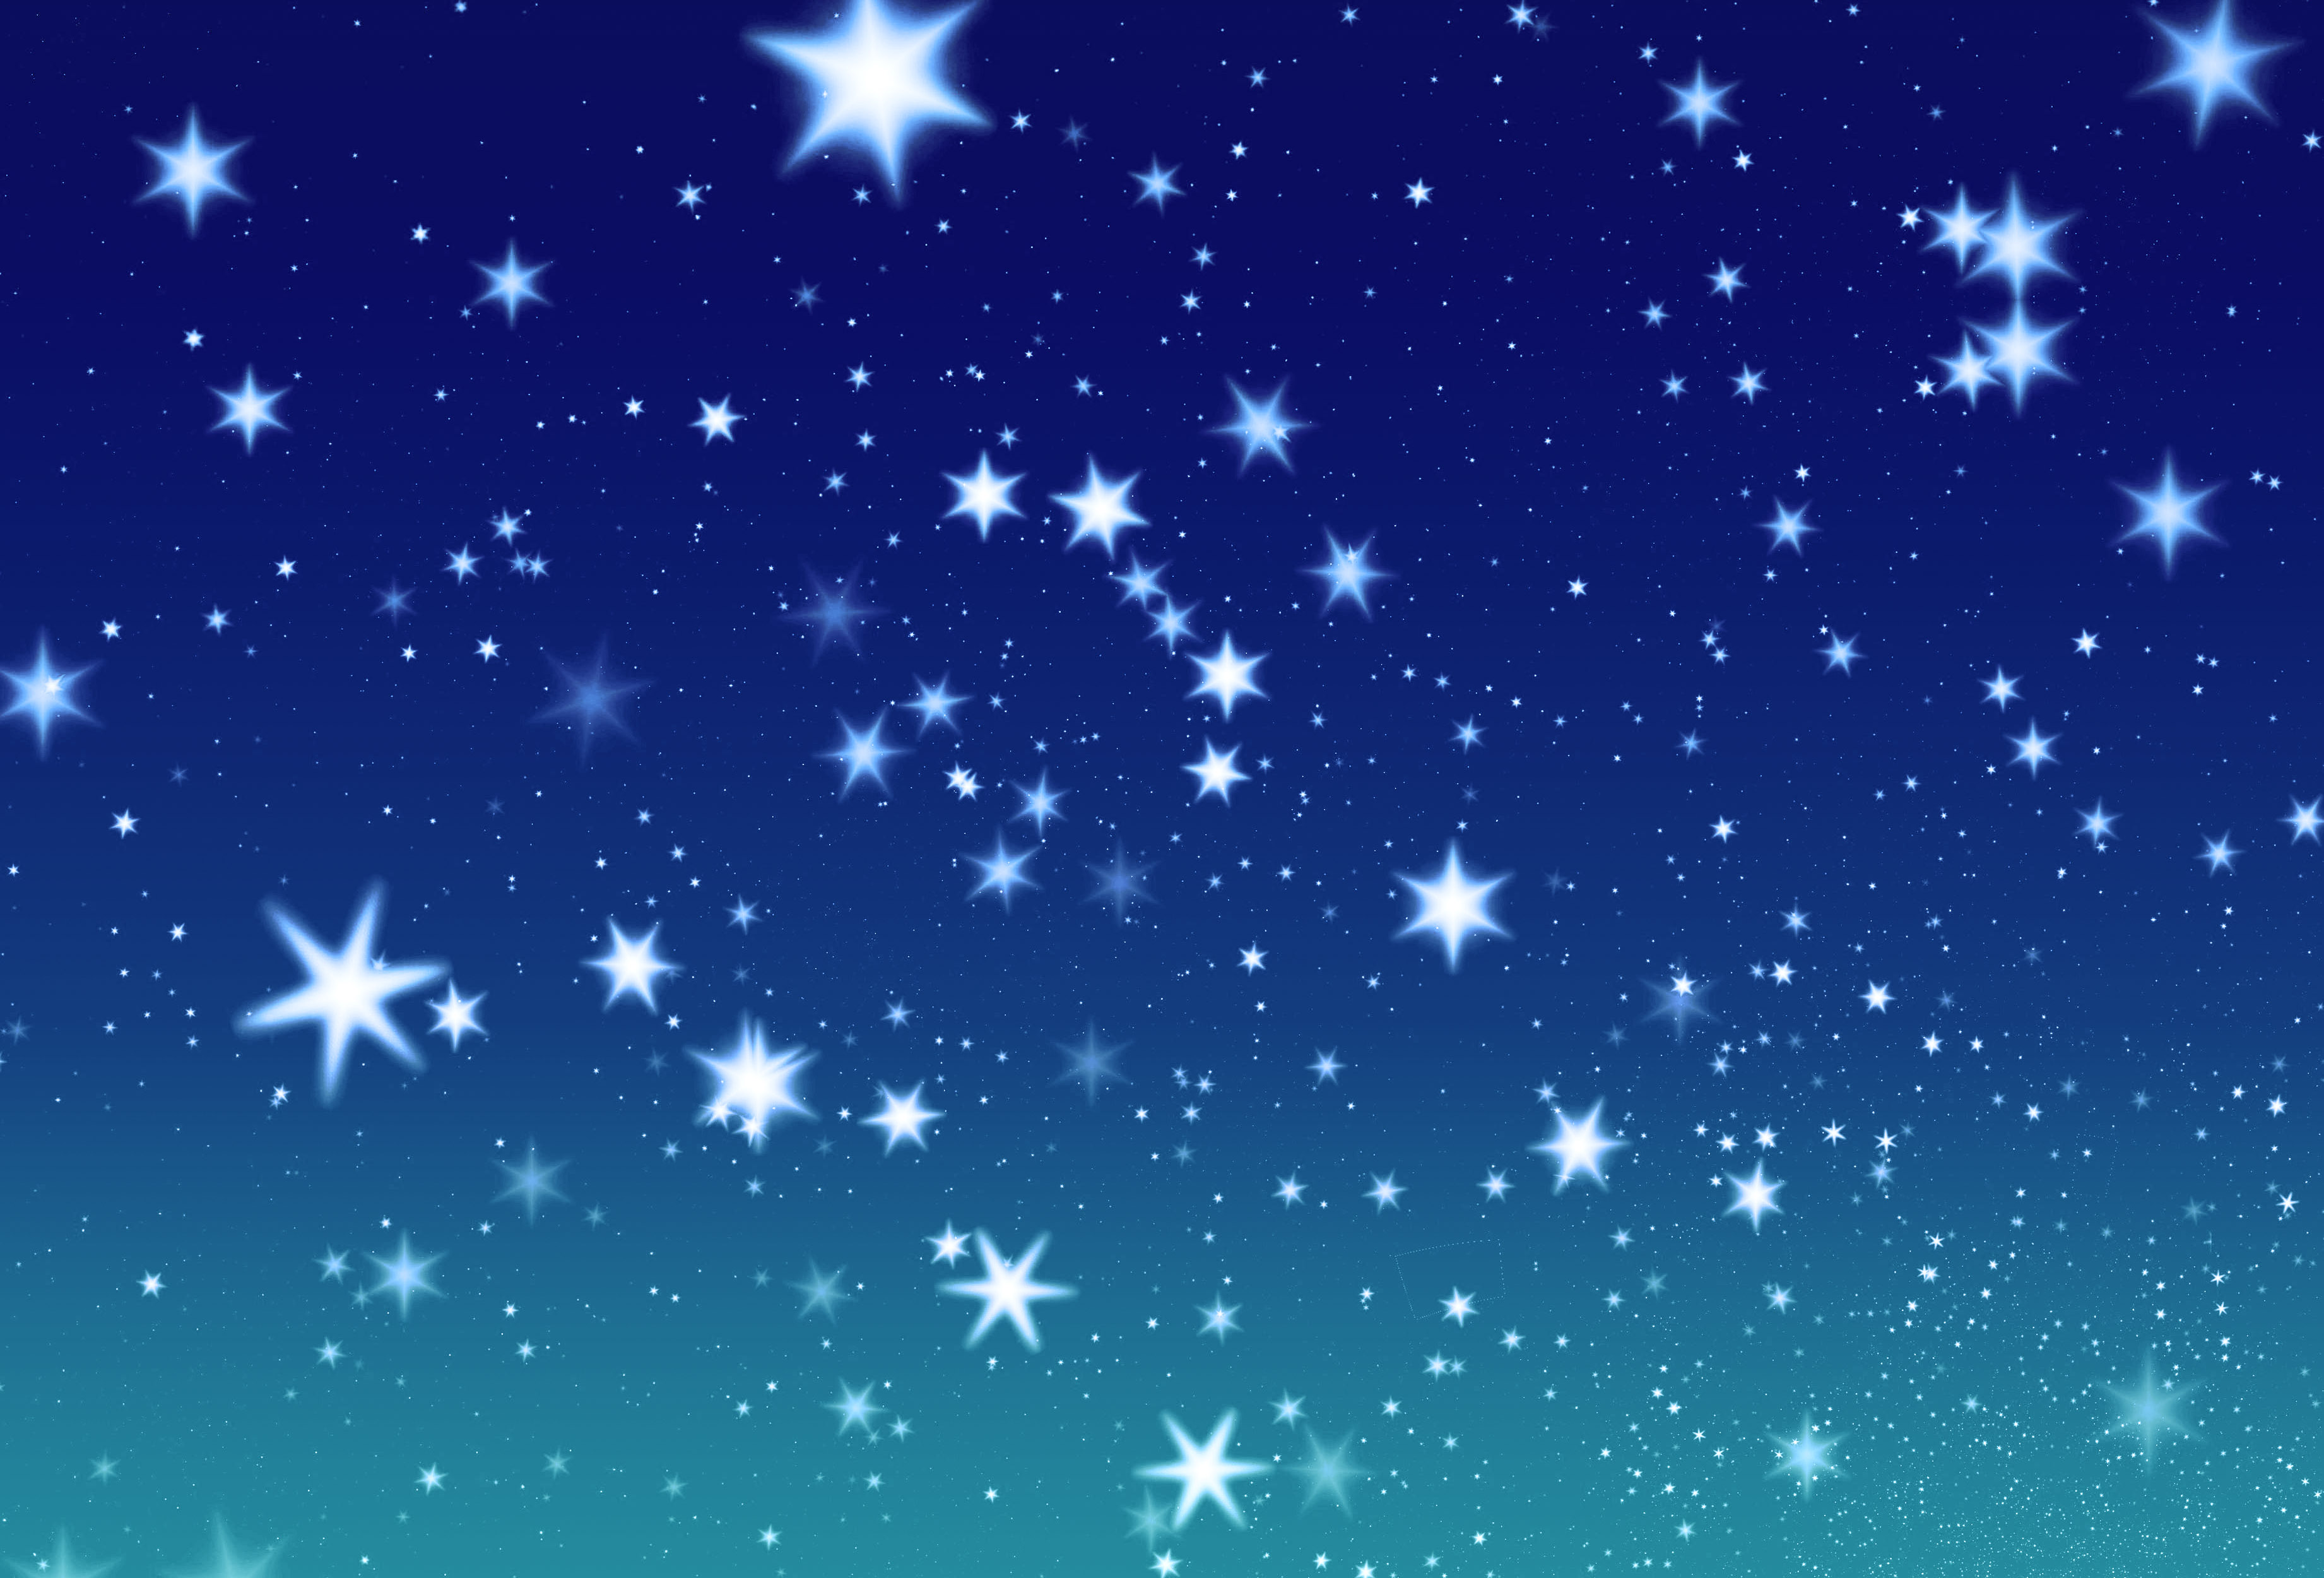 Stars In The Sky Wallpaper On